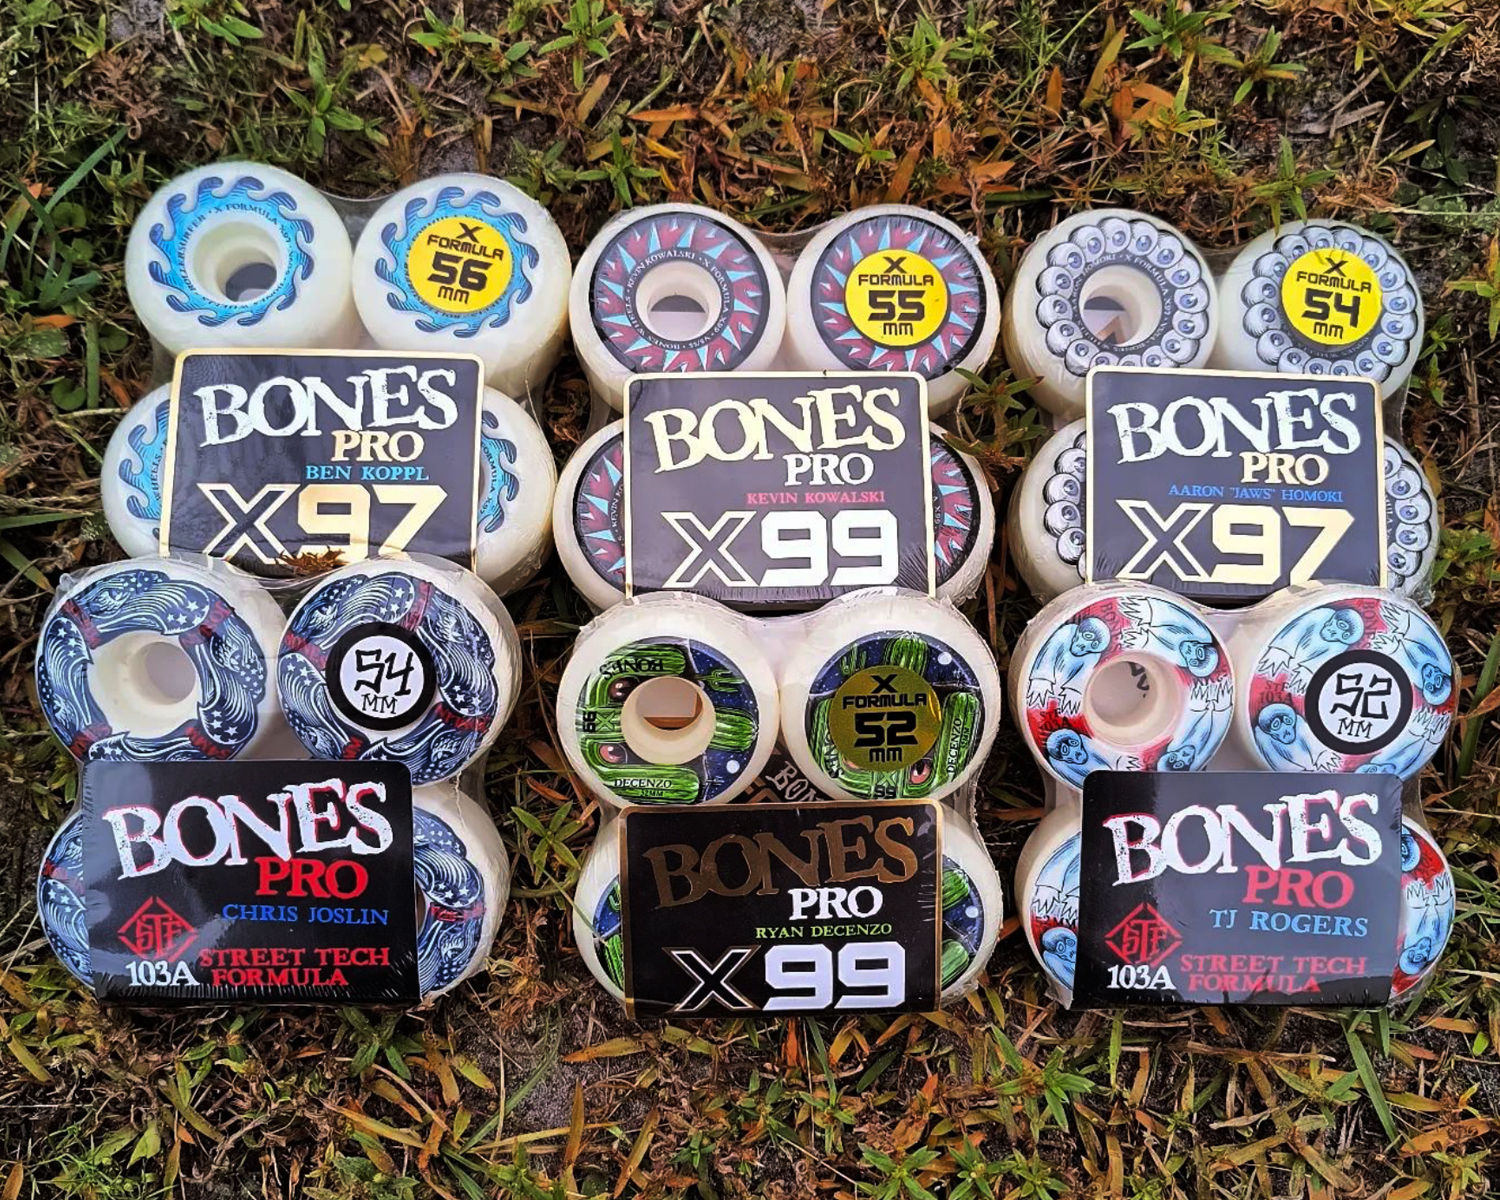 New Bones Pro Wheels!